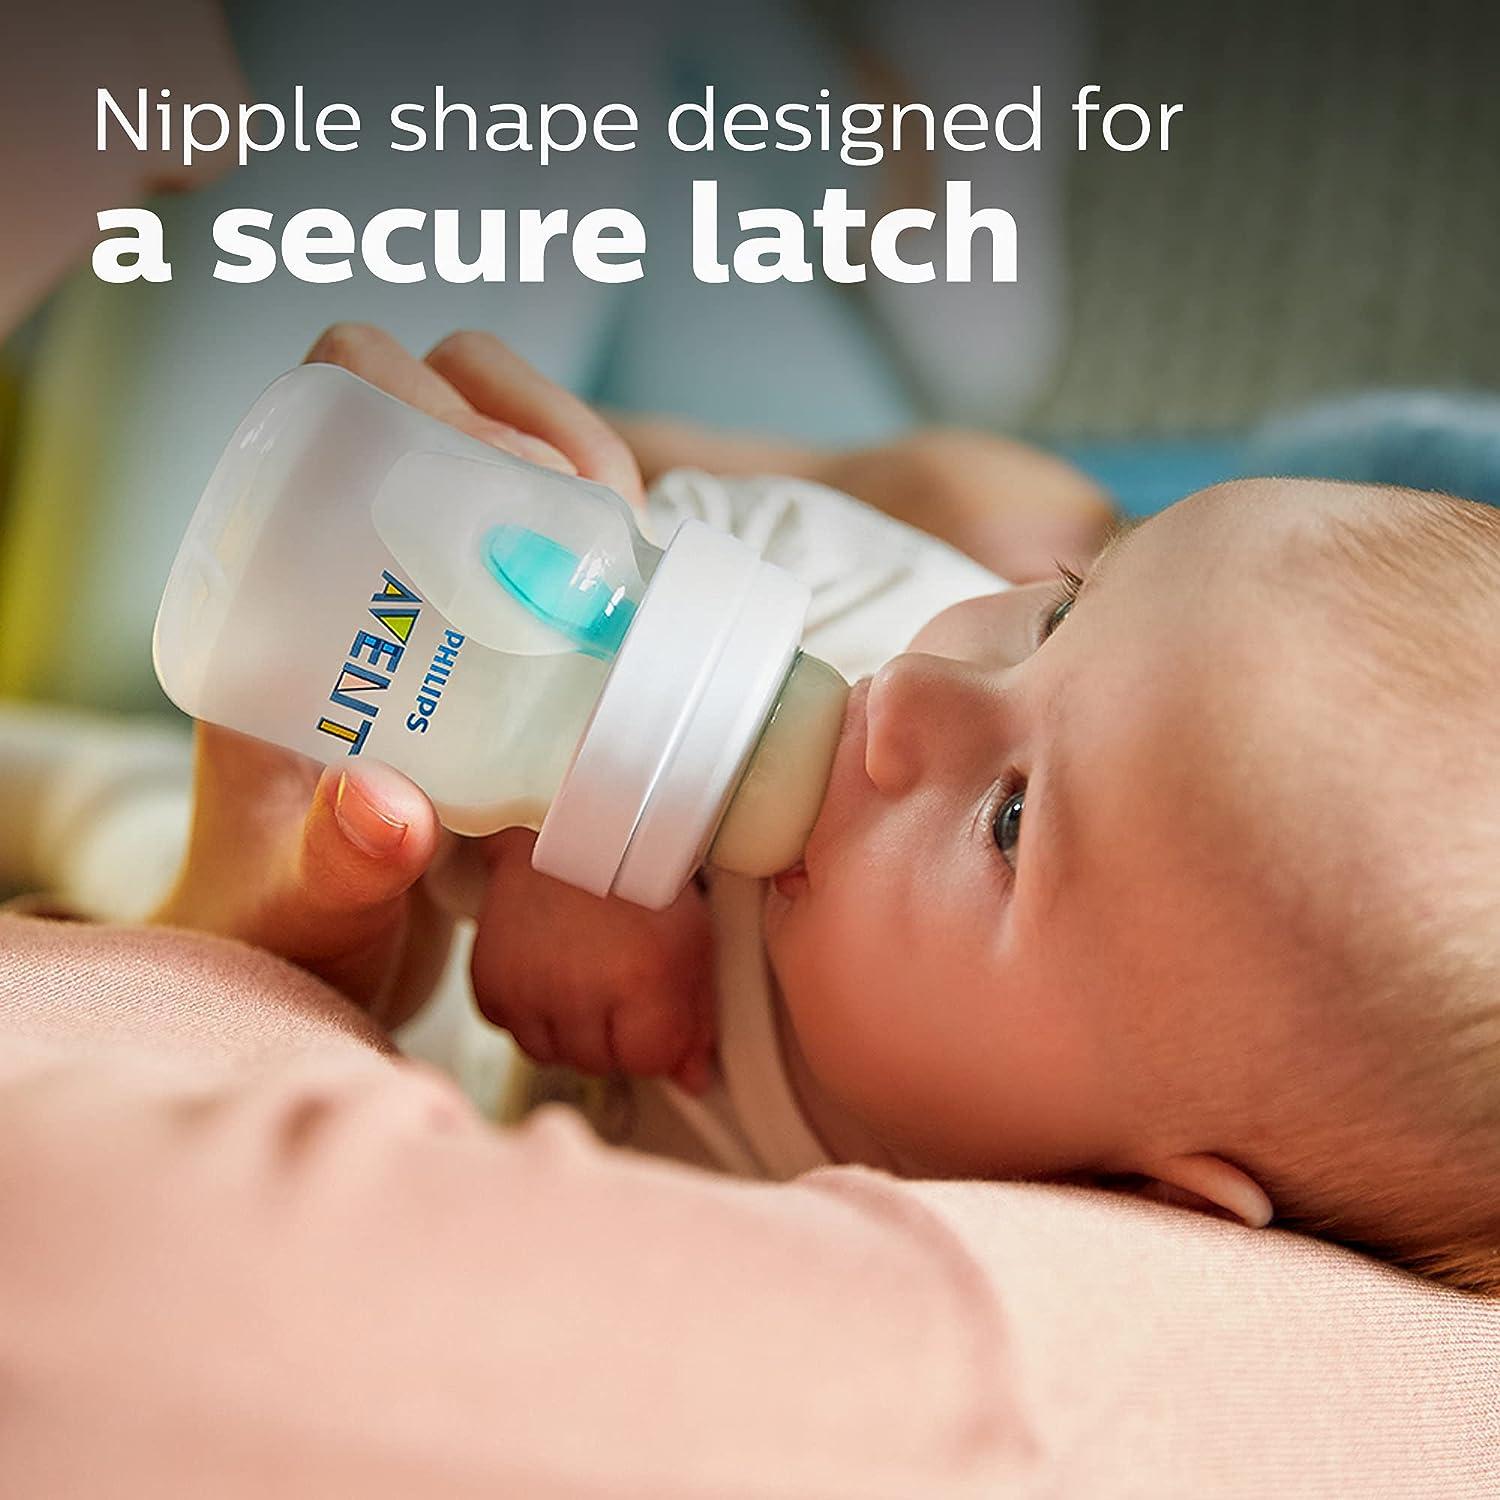 Philips Avent Natural Newborn Baby Bottle Gift Set (SCD838/02) Multiple